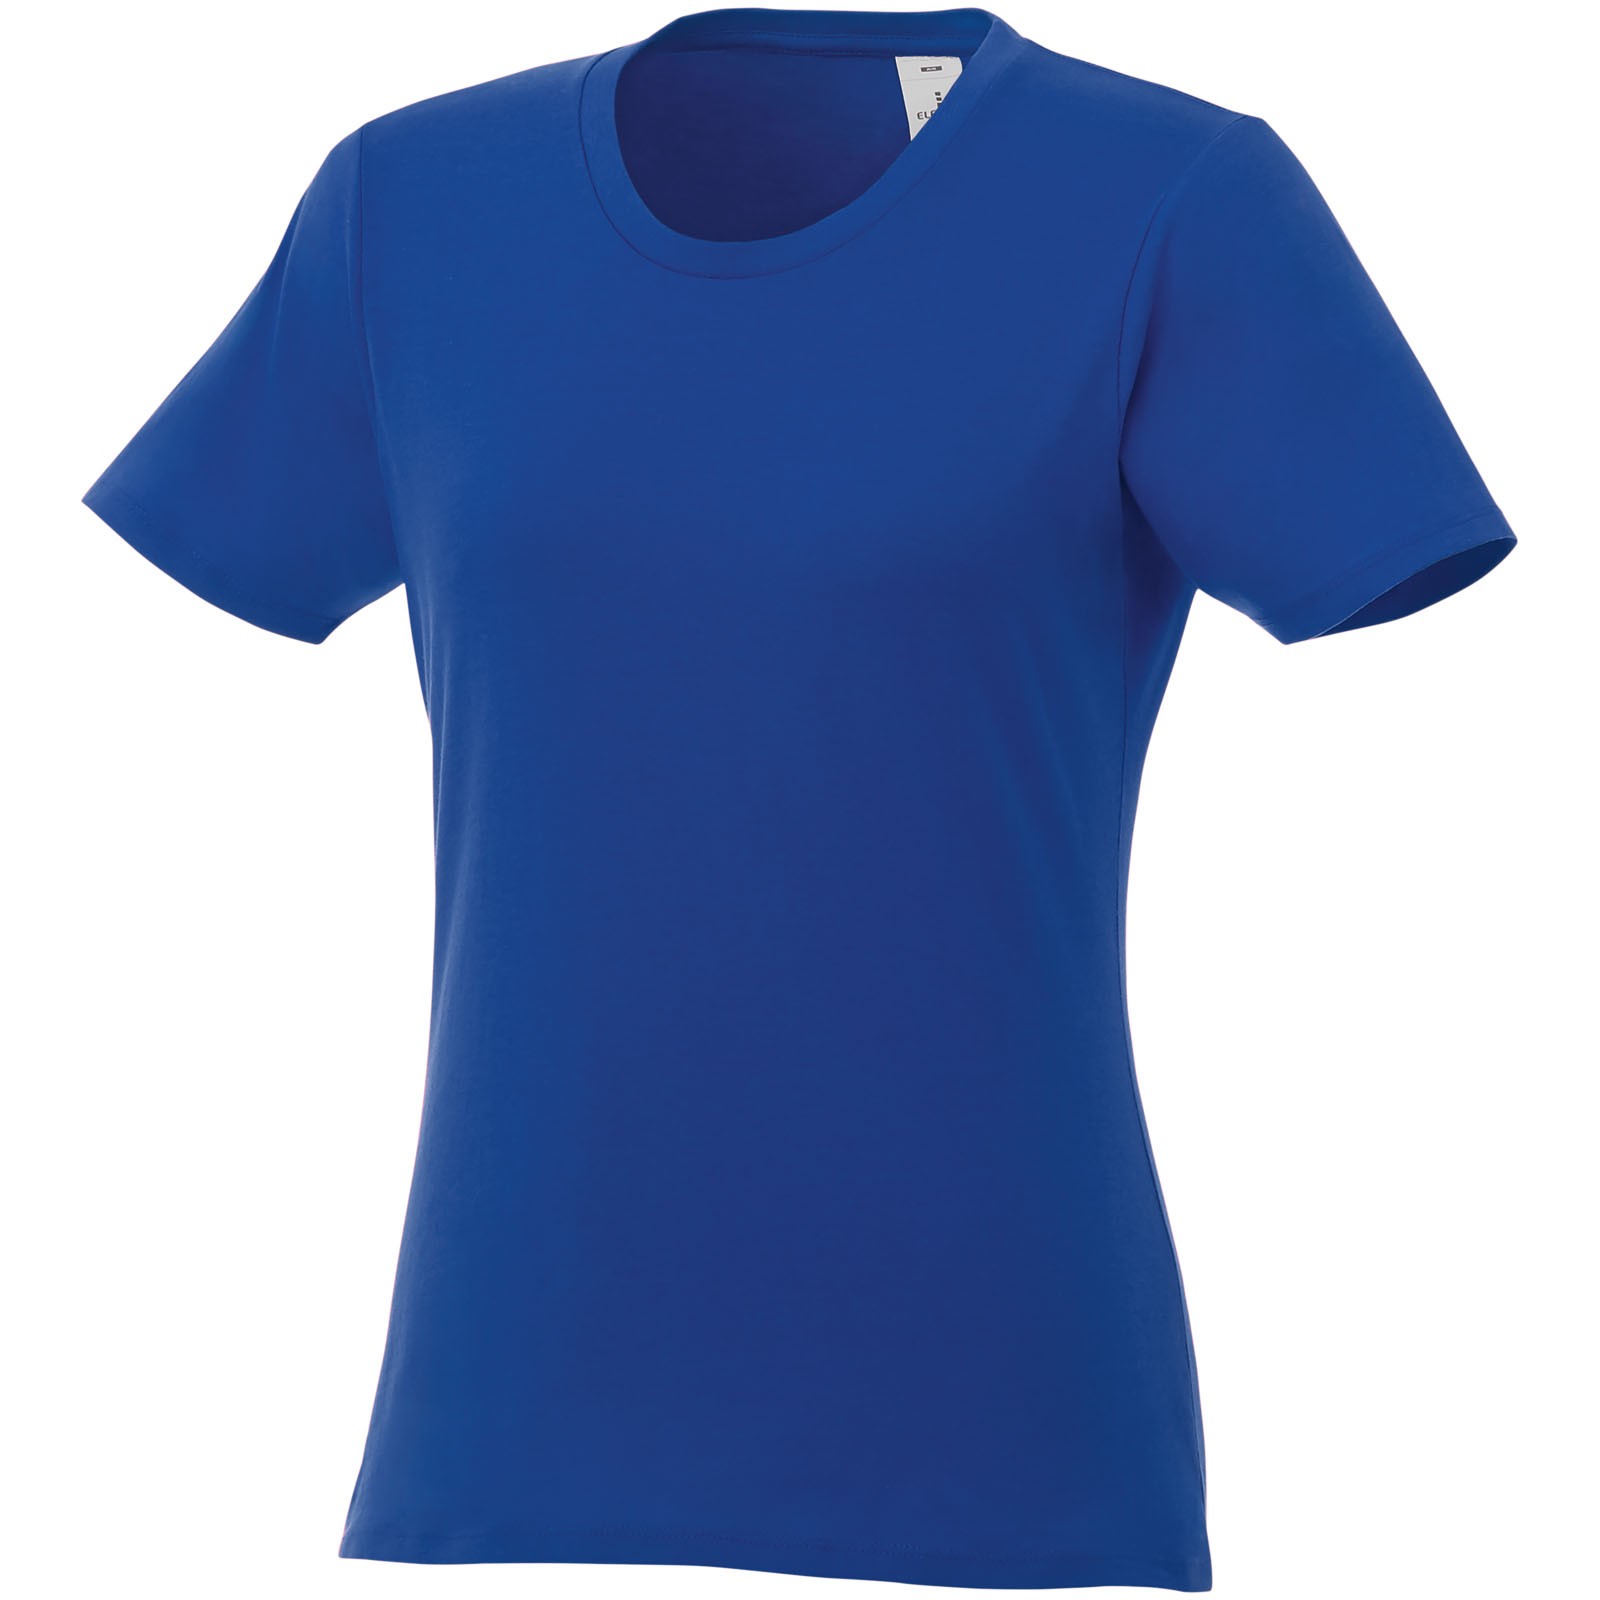 Dámské triko Heros s krátkým rukávem - Modrá / XL